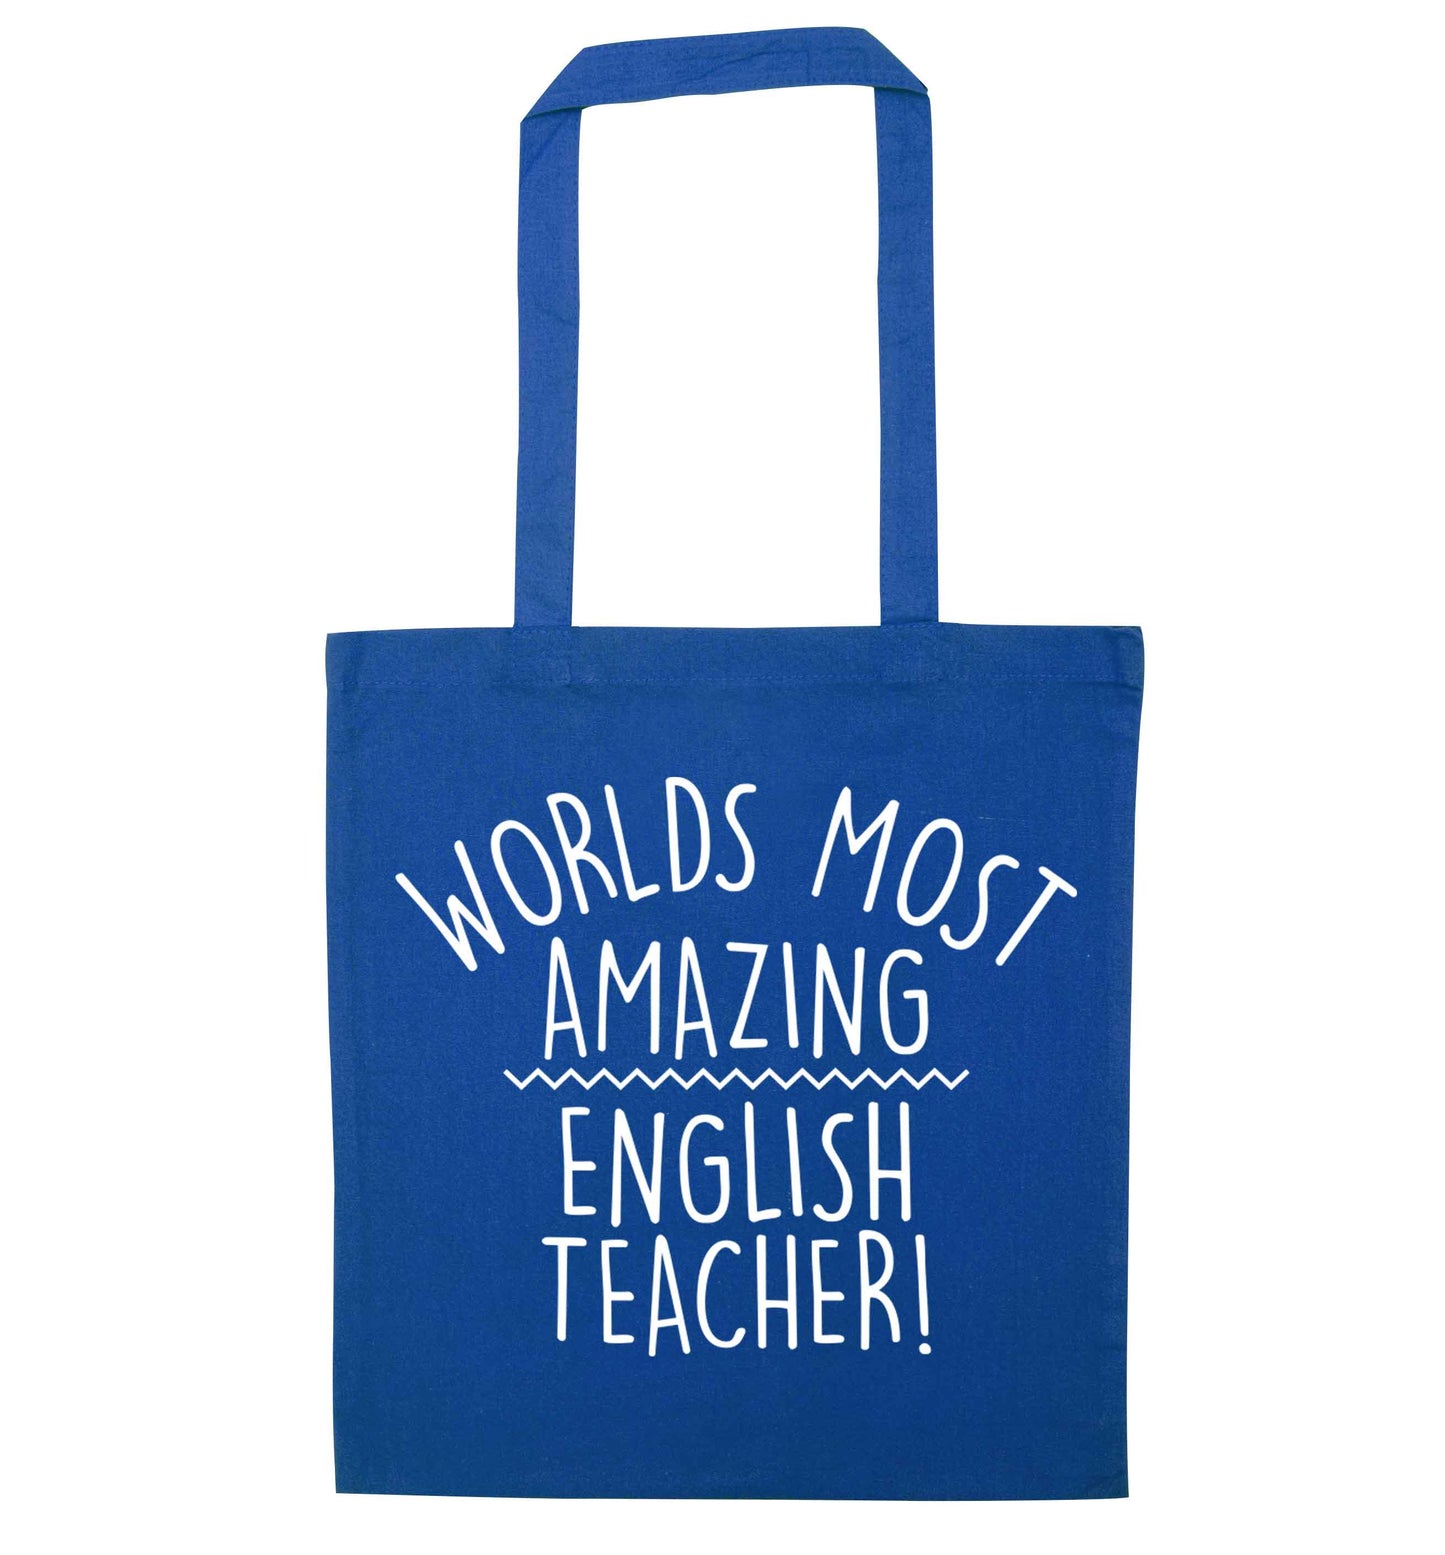 Worlds most amazing English teacher blue tote bag